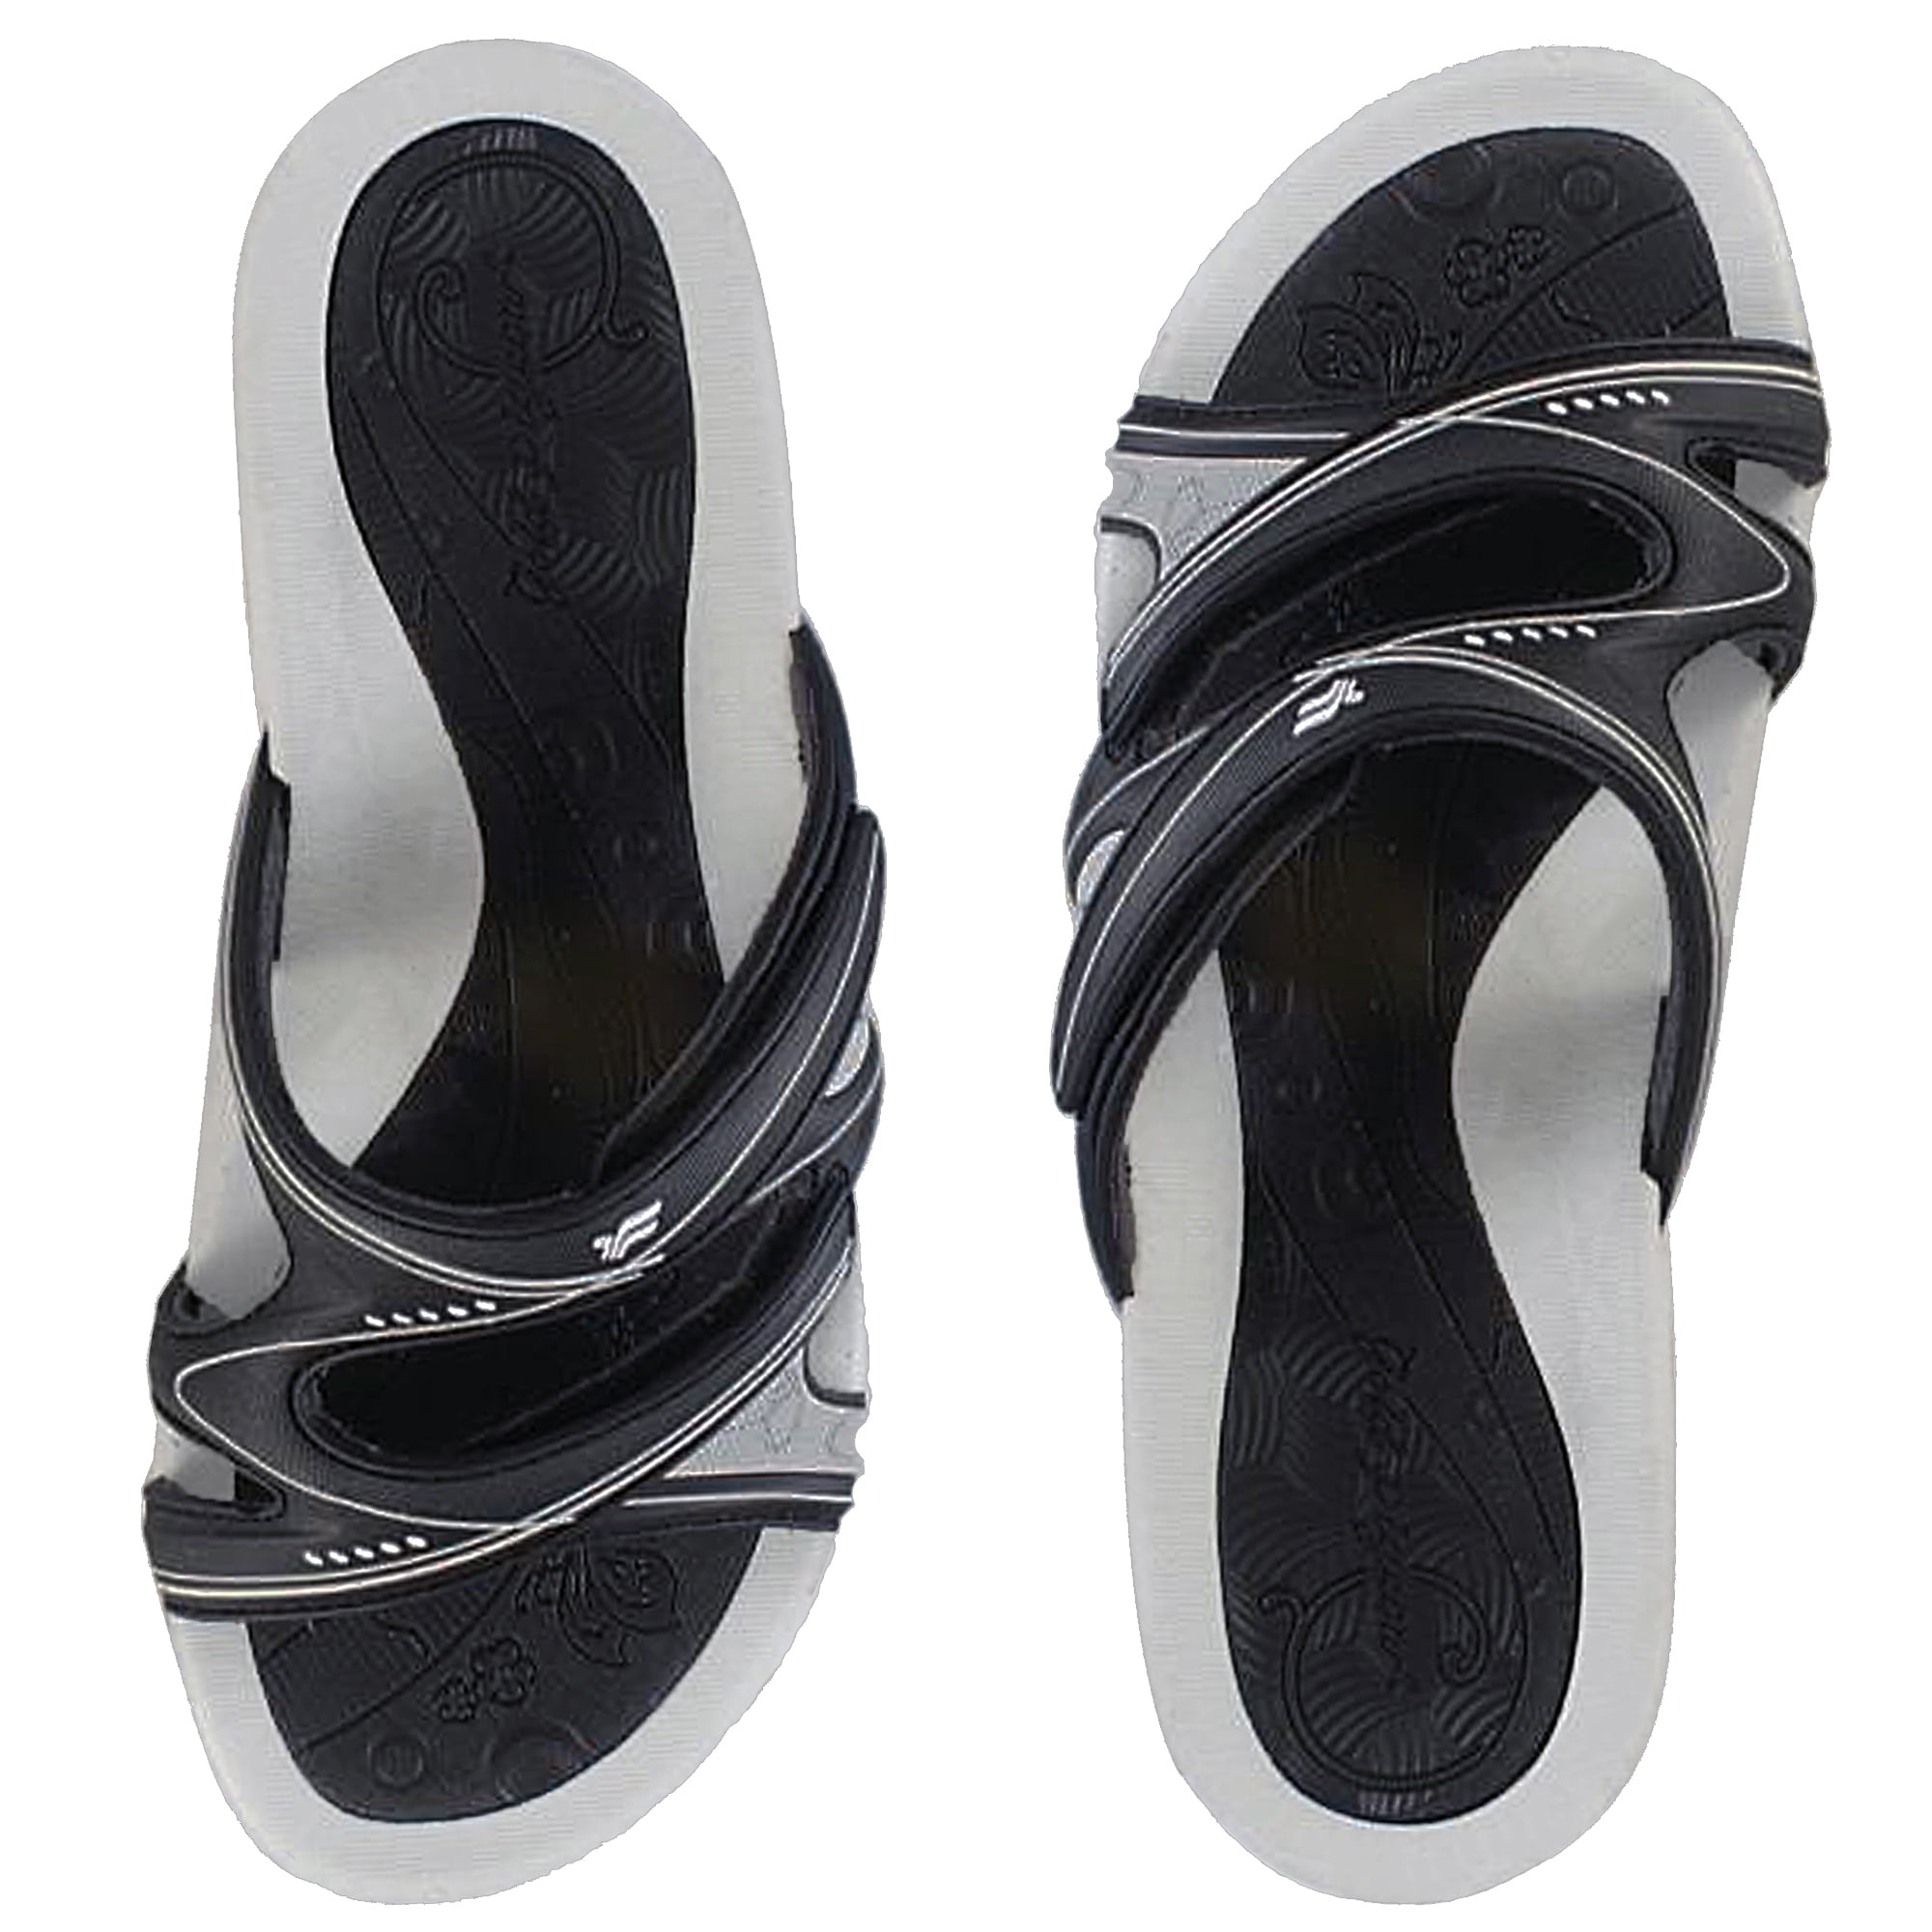 GP Signature Slide Sandals for Women: Grey-22, (US Size 5.5 - 6) - Walmart.com